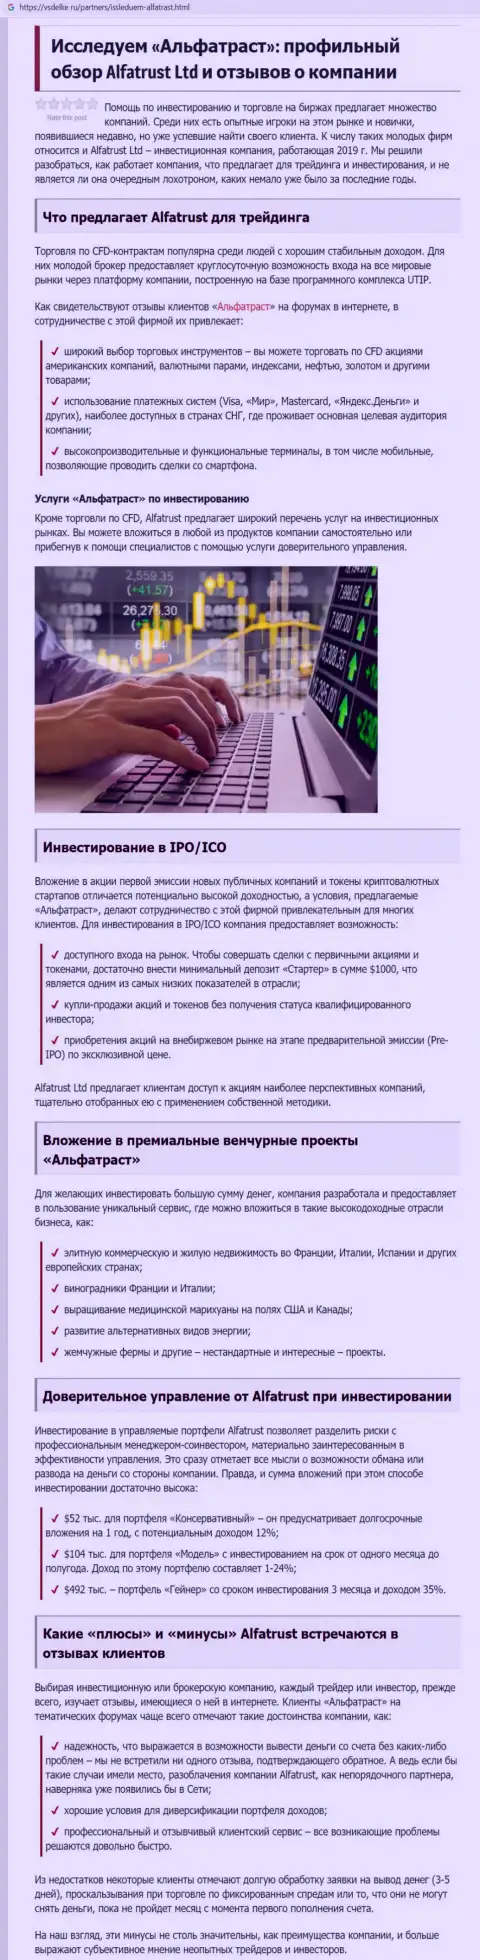 Материал об forex дилере АльфаТраст на сайте vsdelke ru